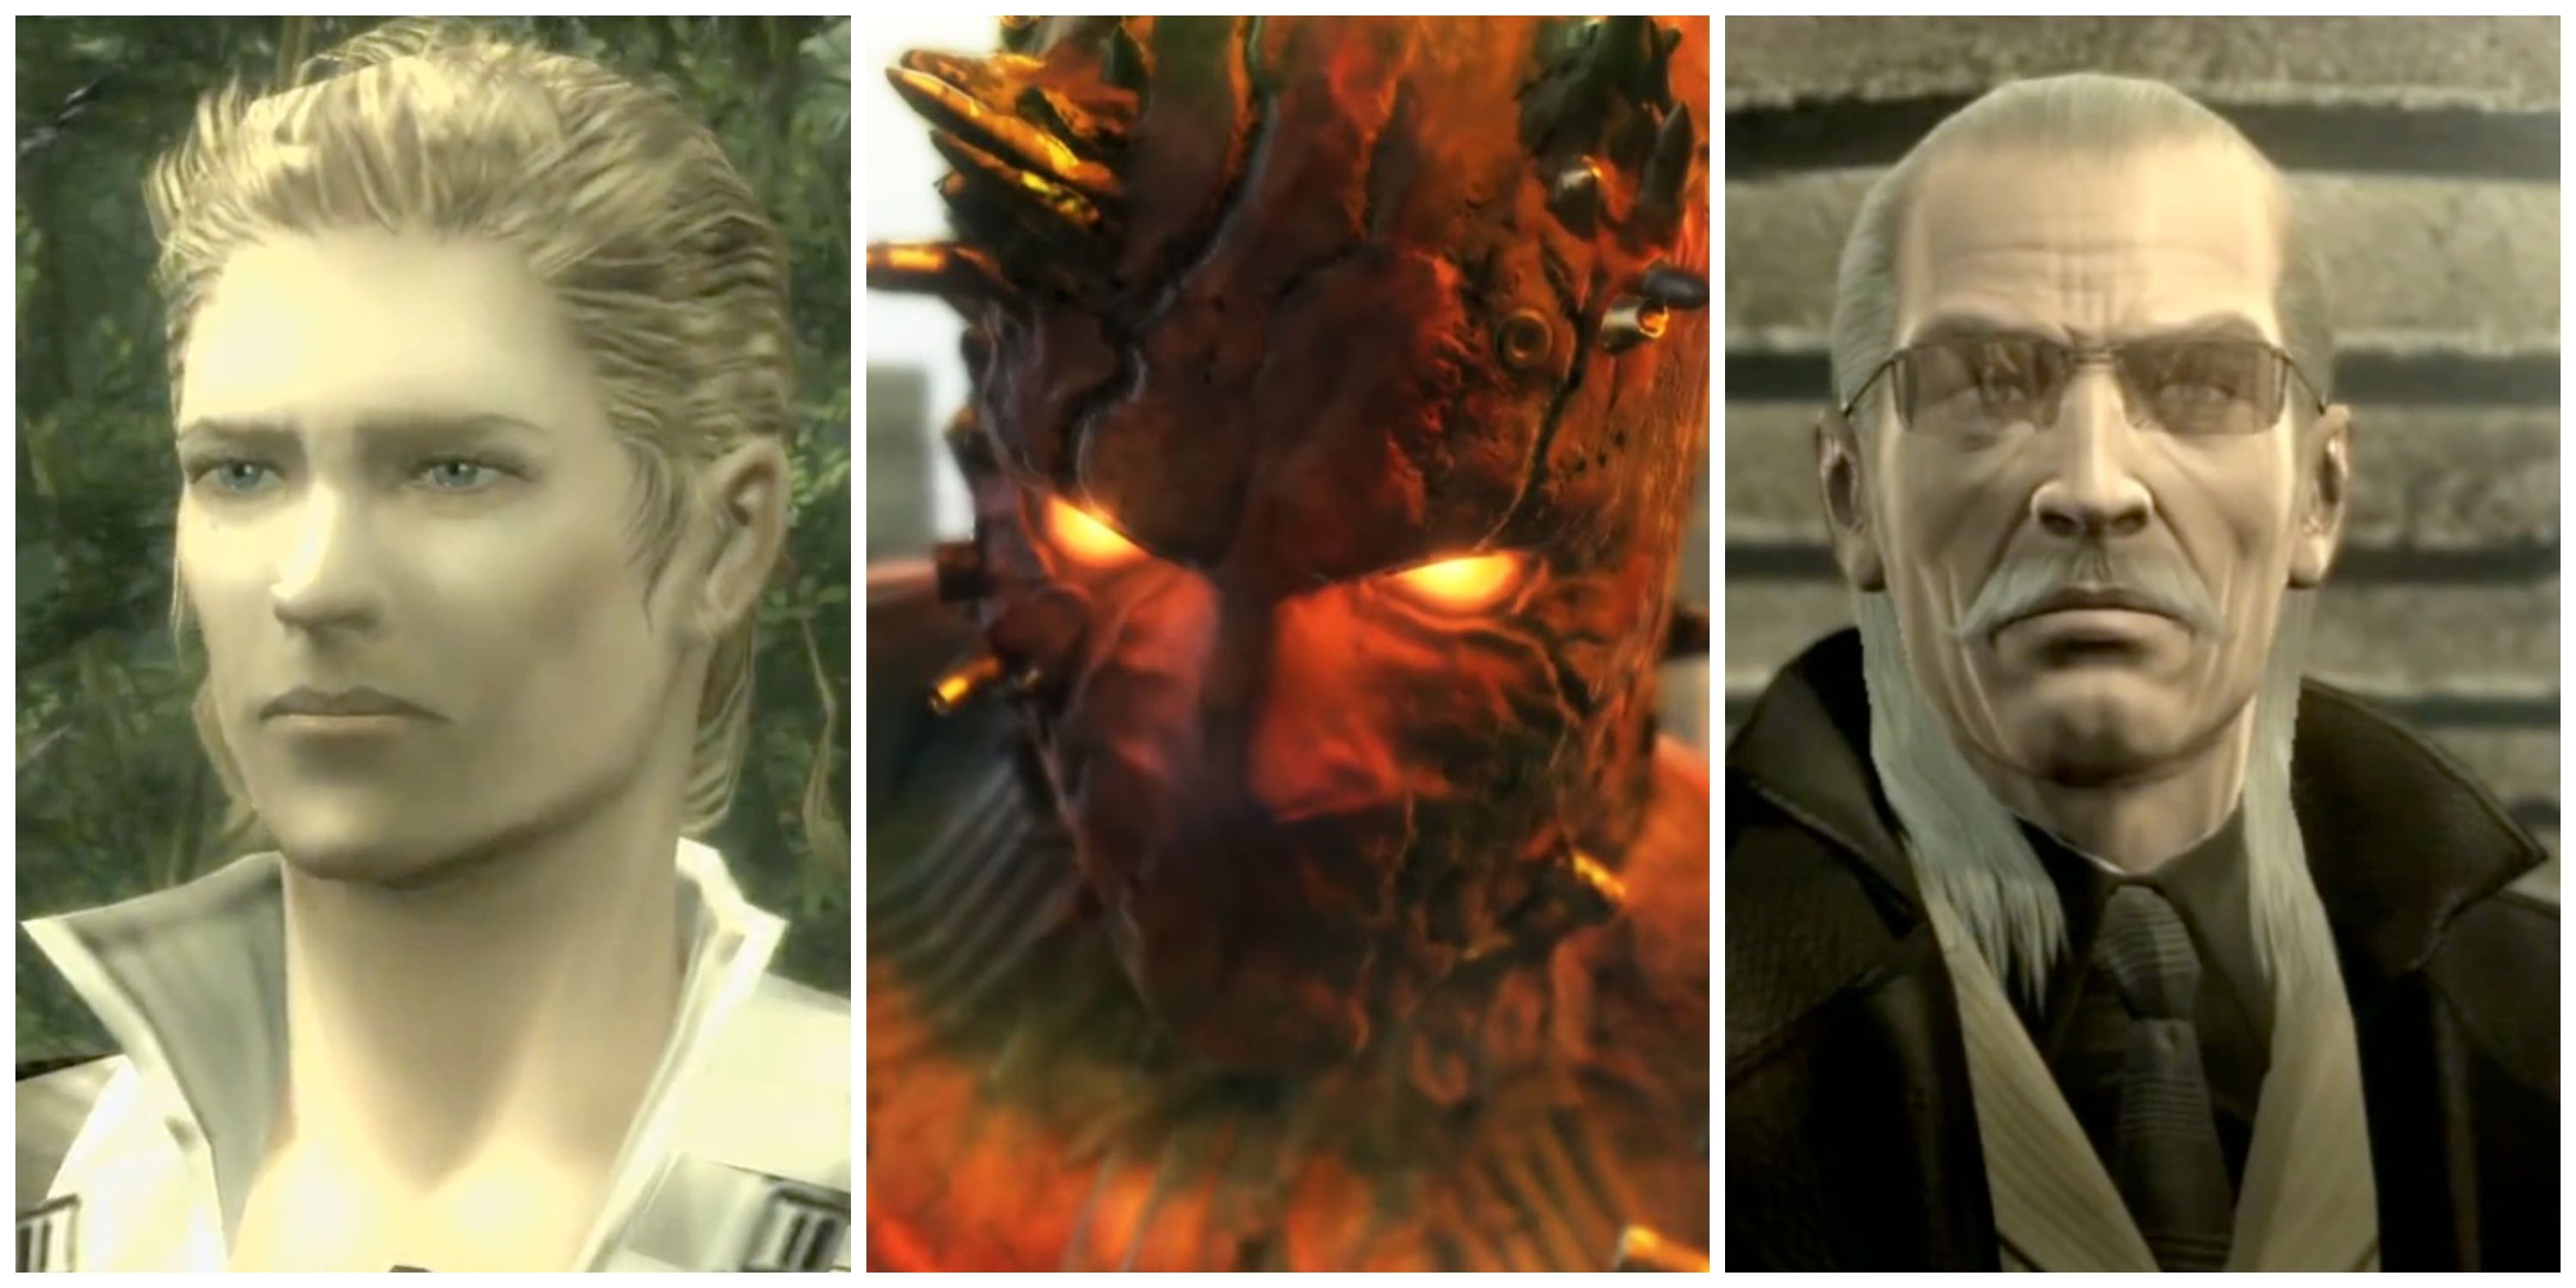 Metal Gear Rising: Revengeance' pits Raiden against Gekkos and a